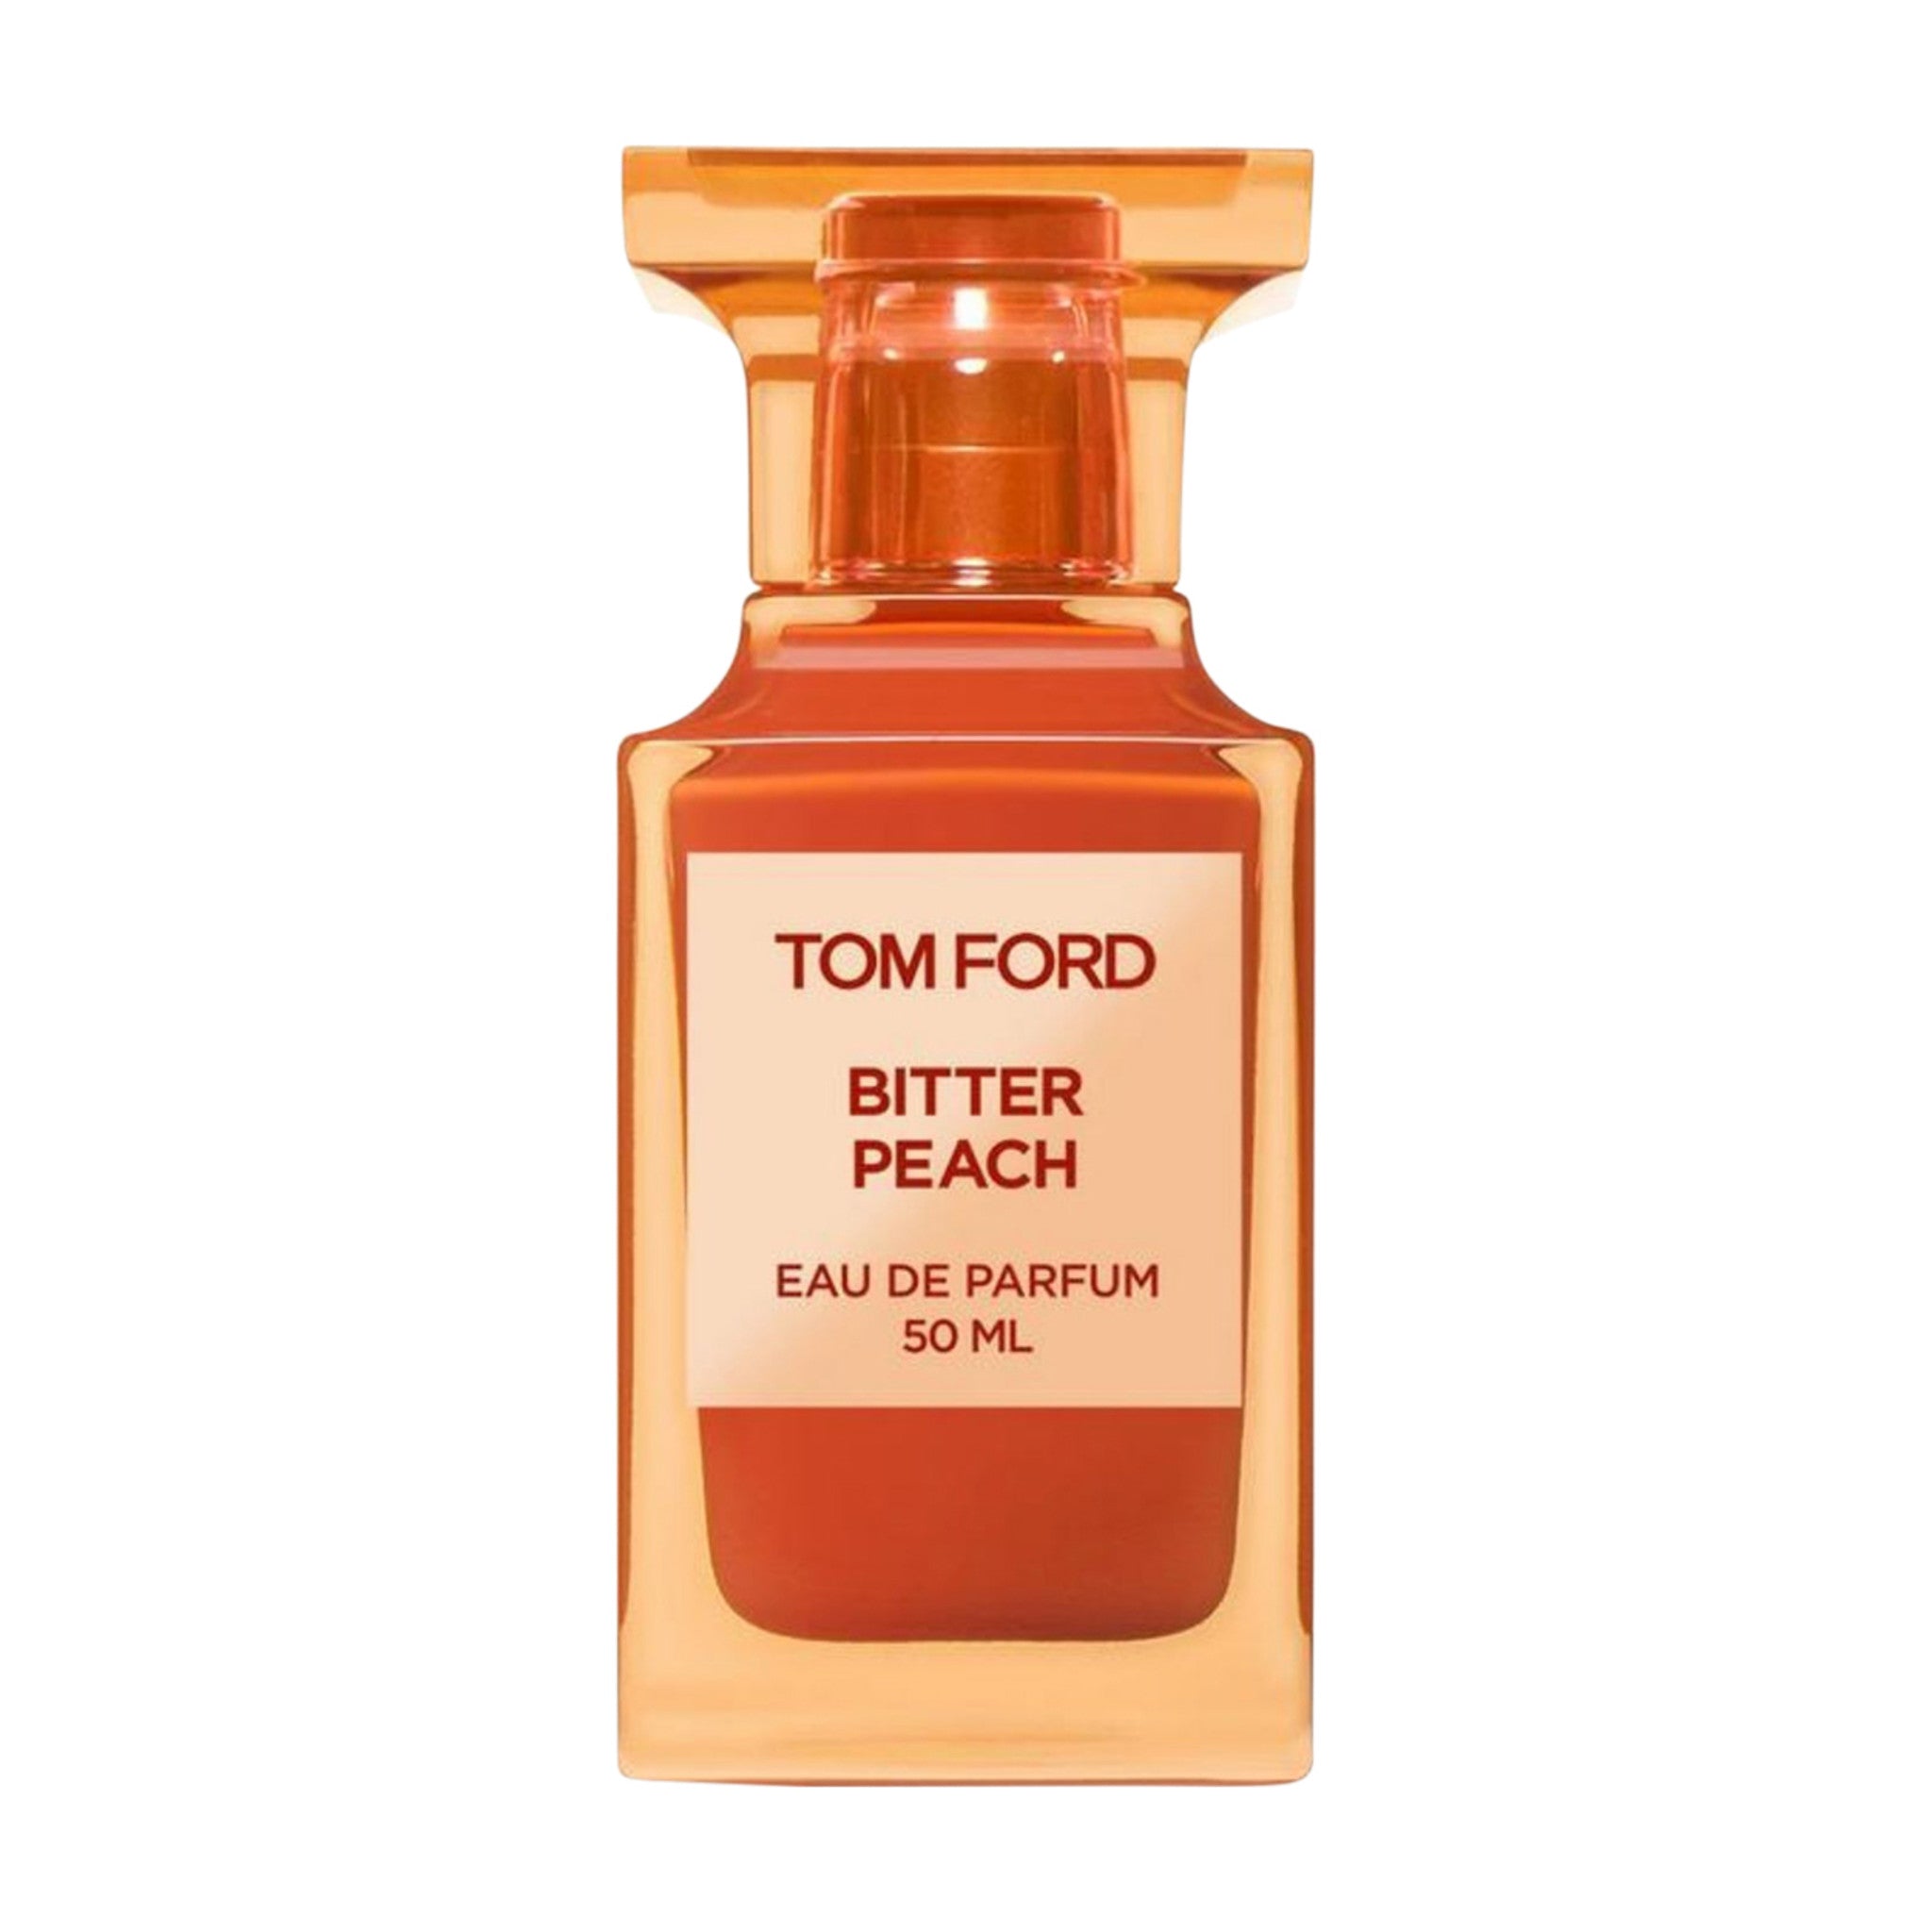 Fancy 50ml Cute Perfume Bottles Round Shape Design Unique Orange